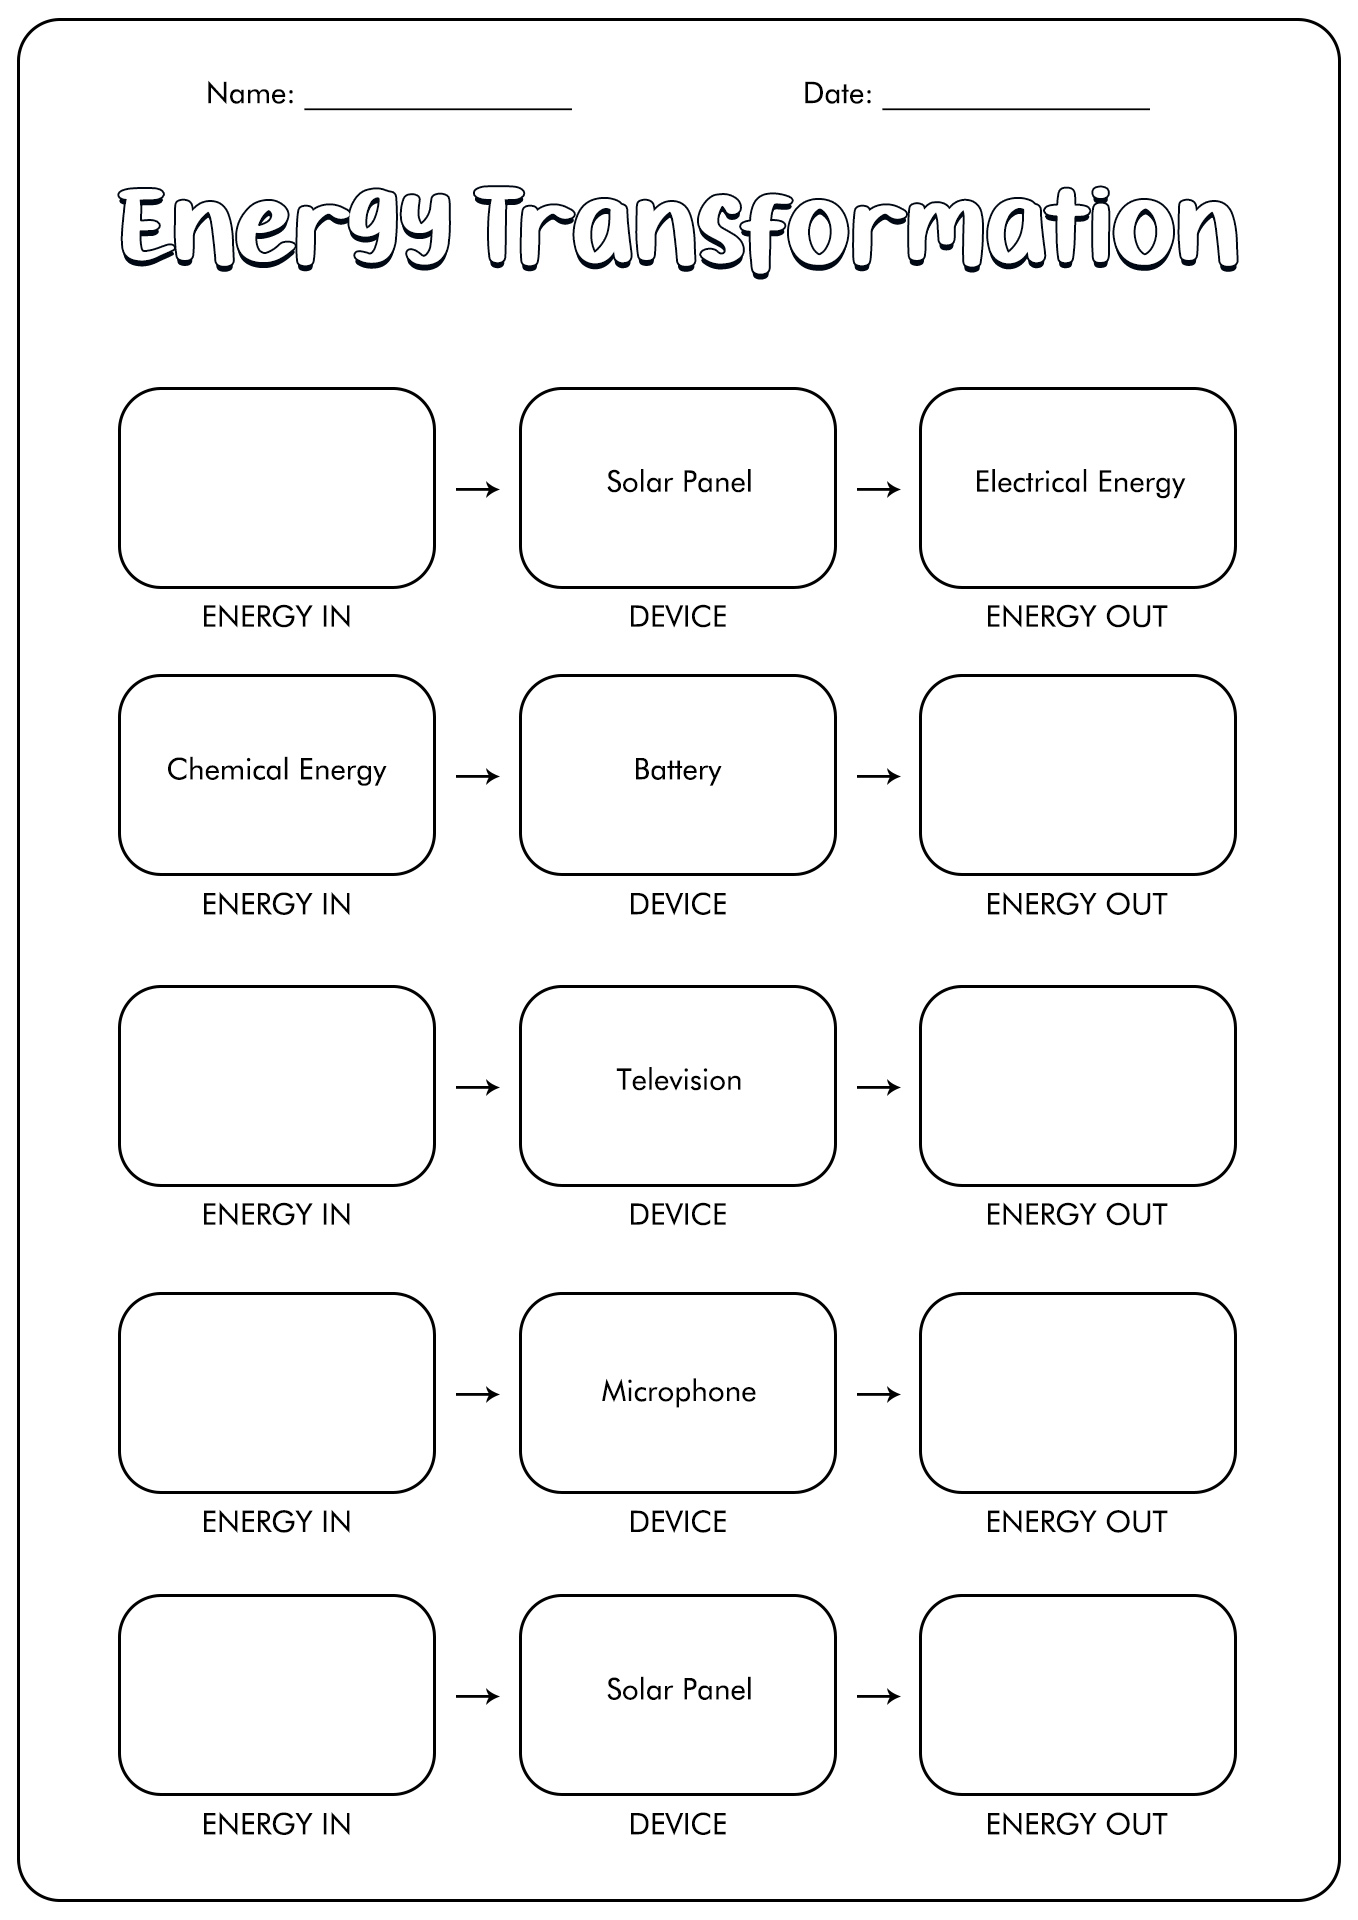 6th Grade Energy Transformation Worksheet Image